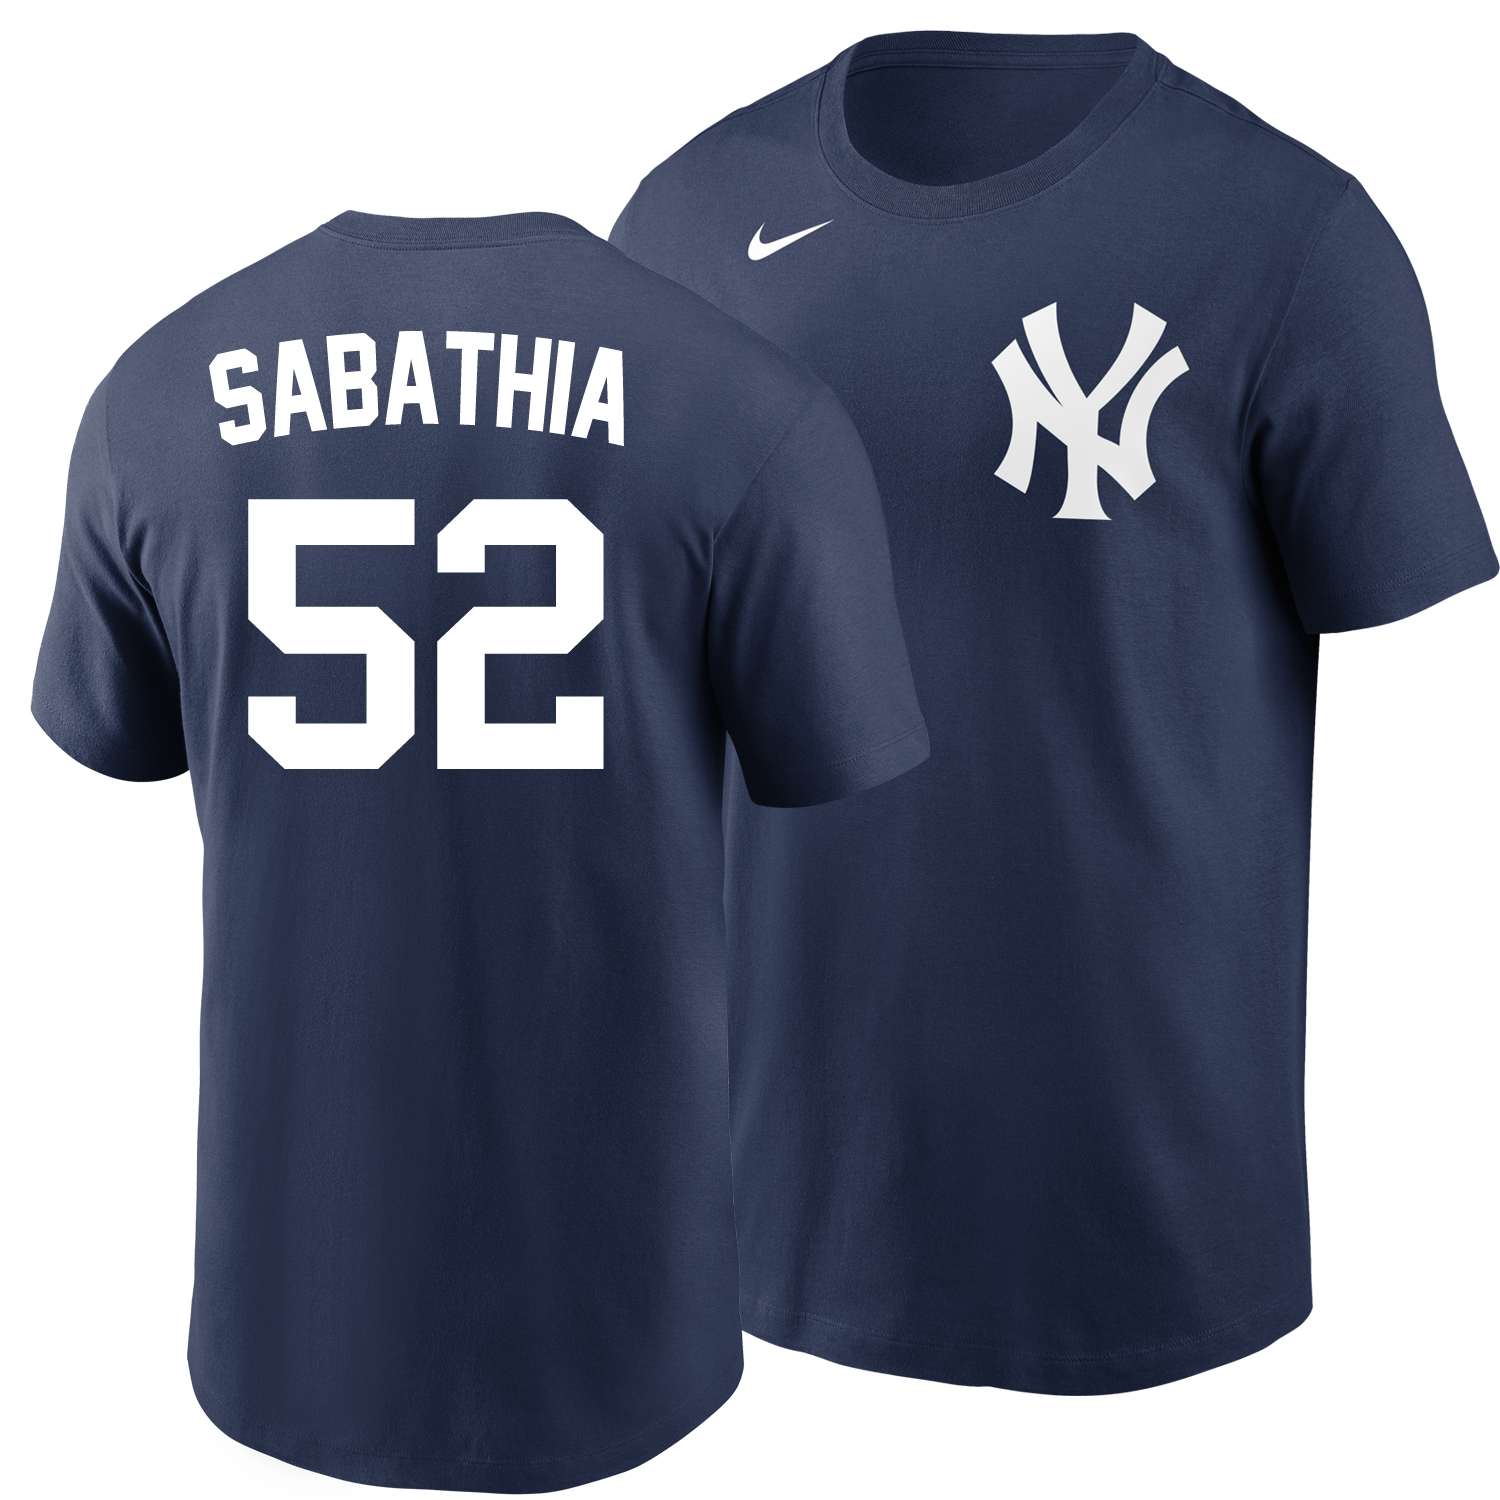 Buy C.C. Sabathia Cleveland Indians Name and Number T-Shirt (X